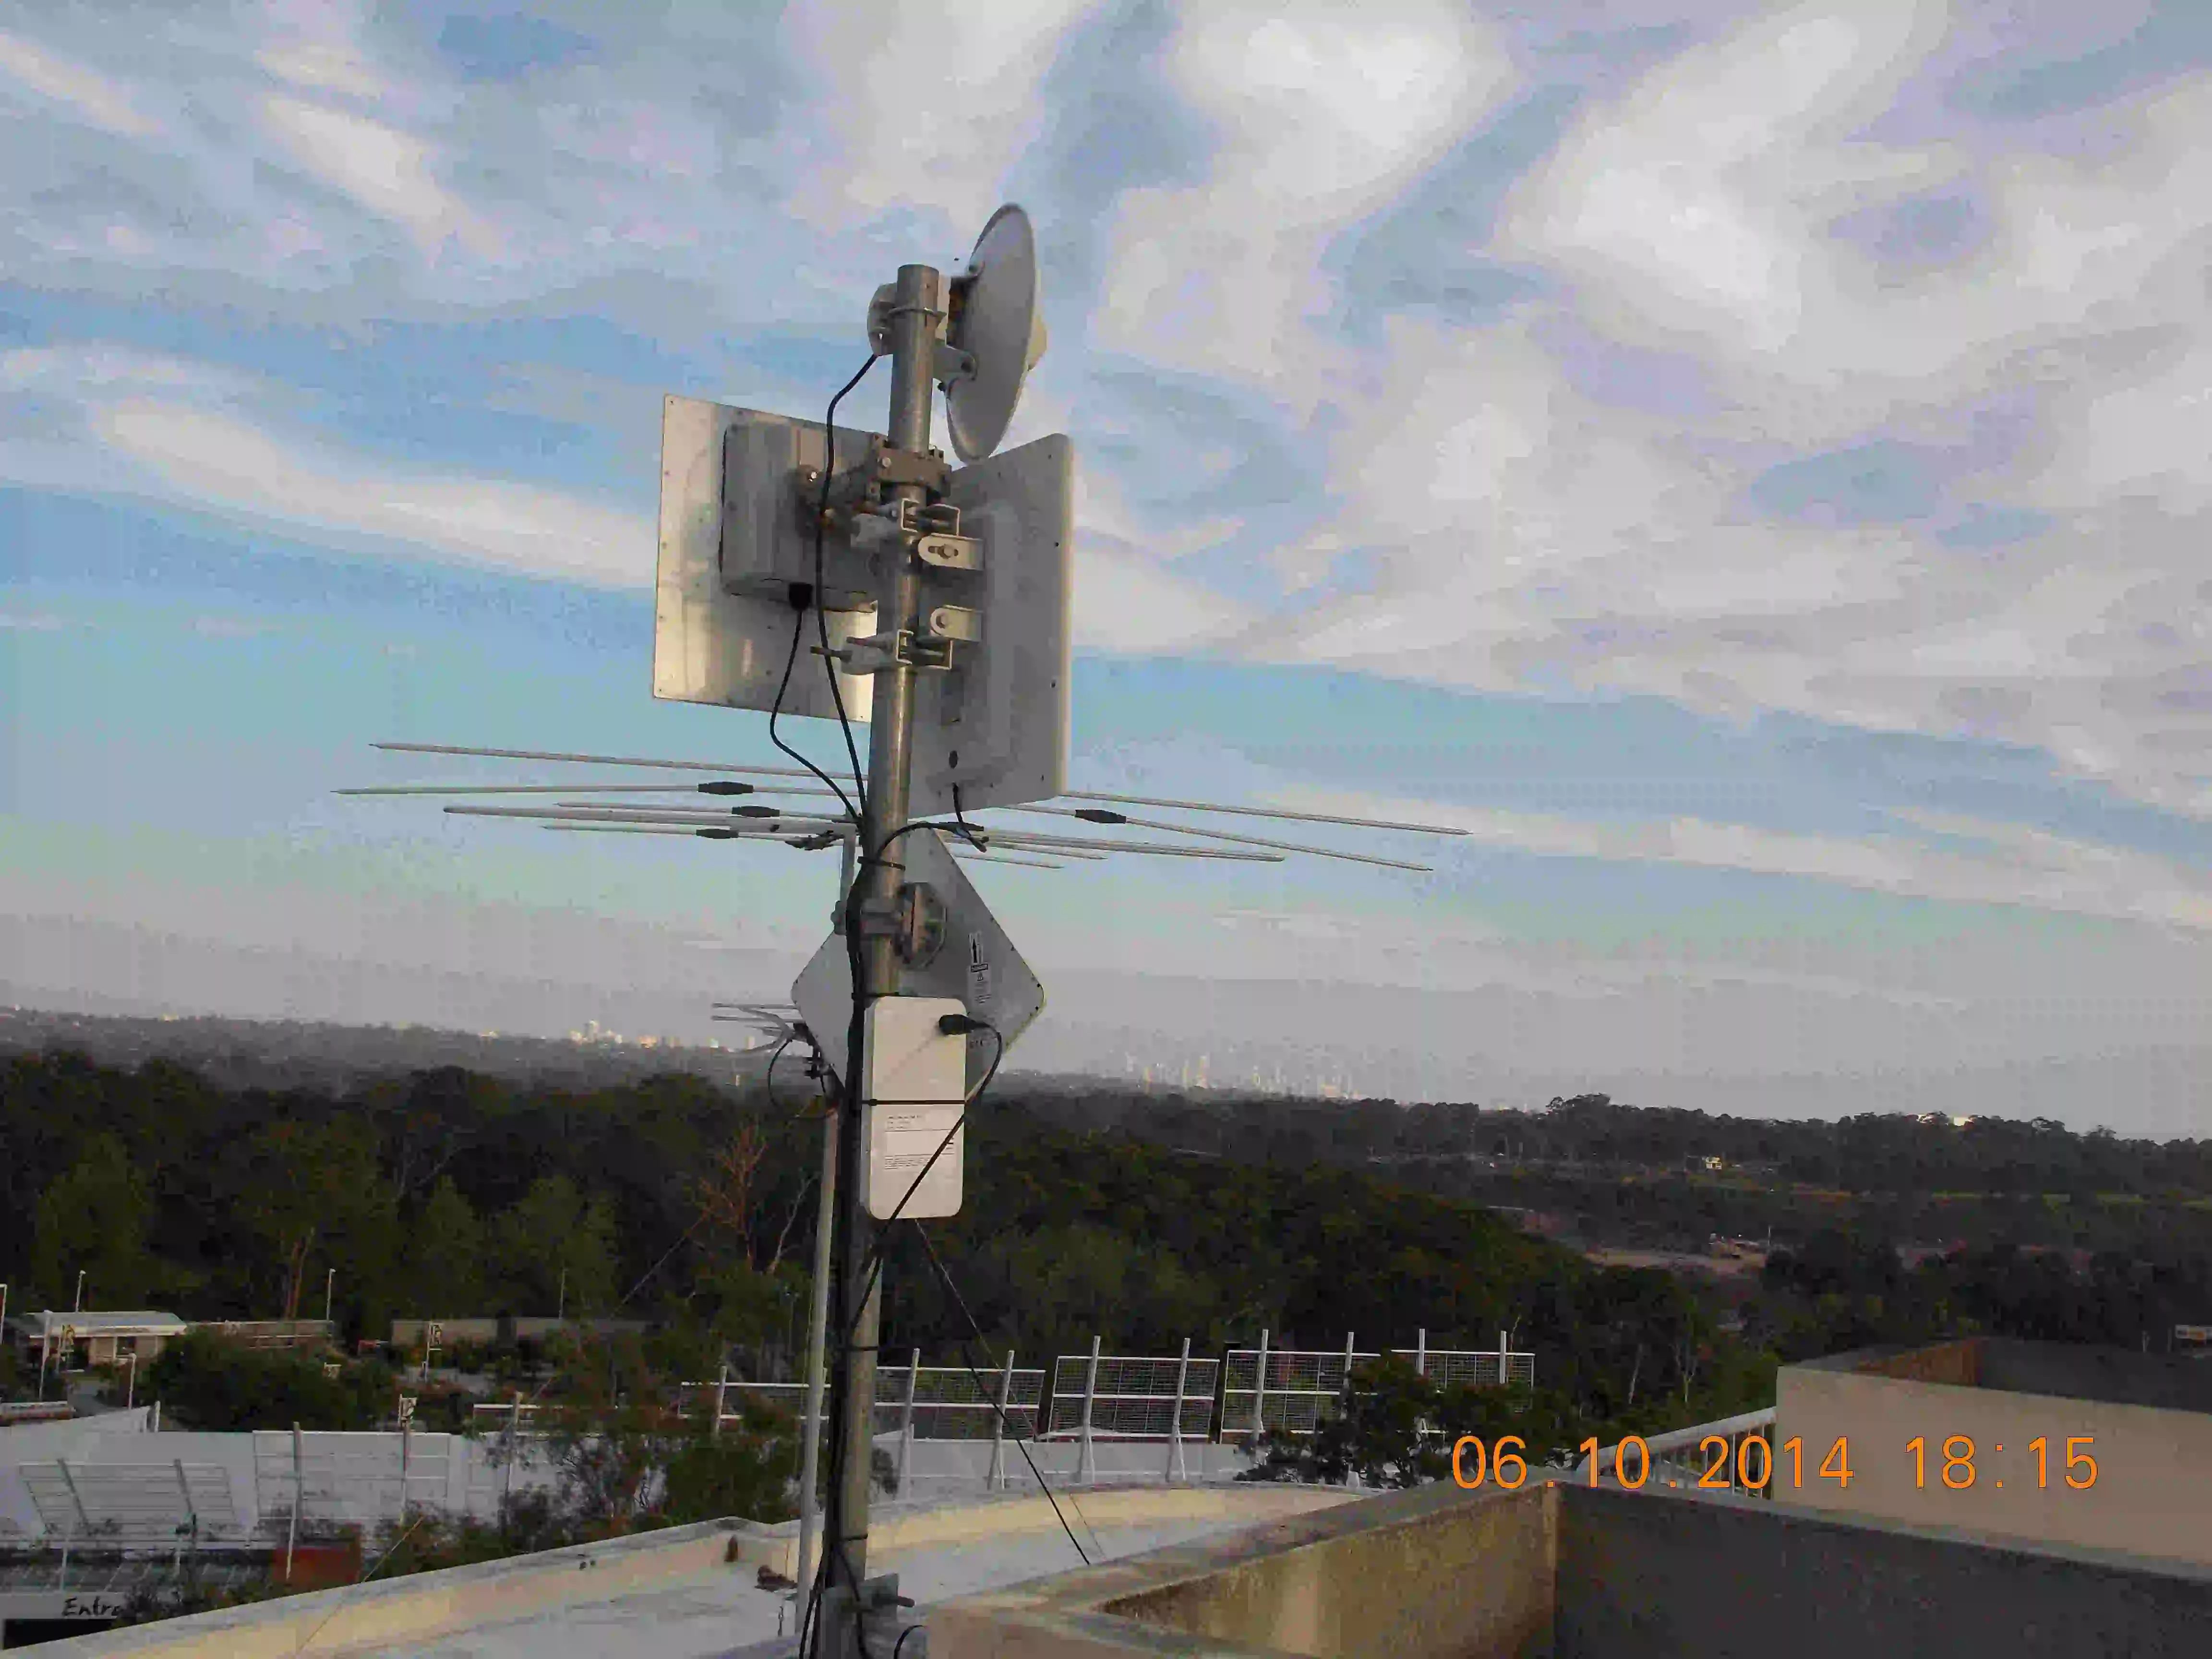 SP52948-BigAir-running-illegal-wireless-services-on-roof-Block-C-photo-14-6Oct2014